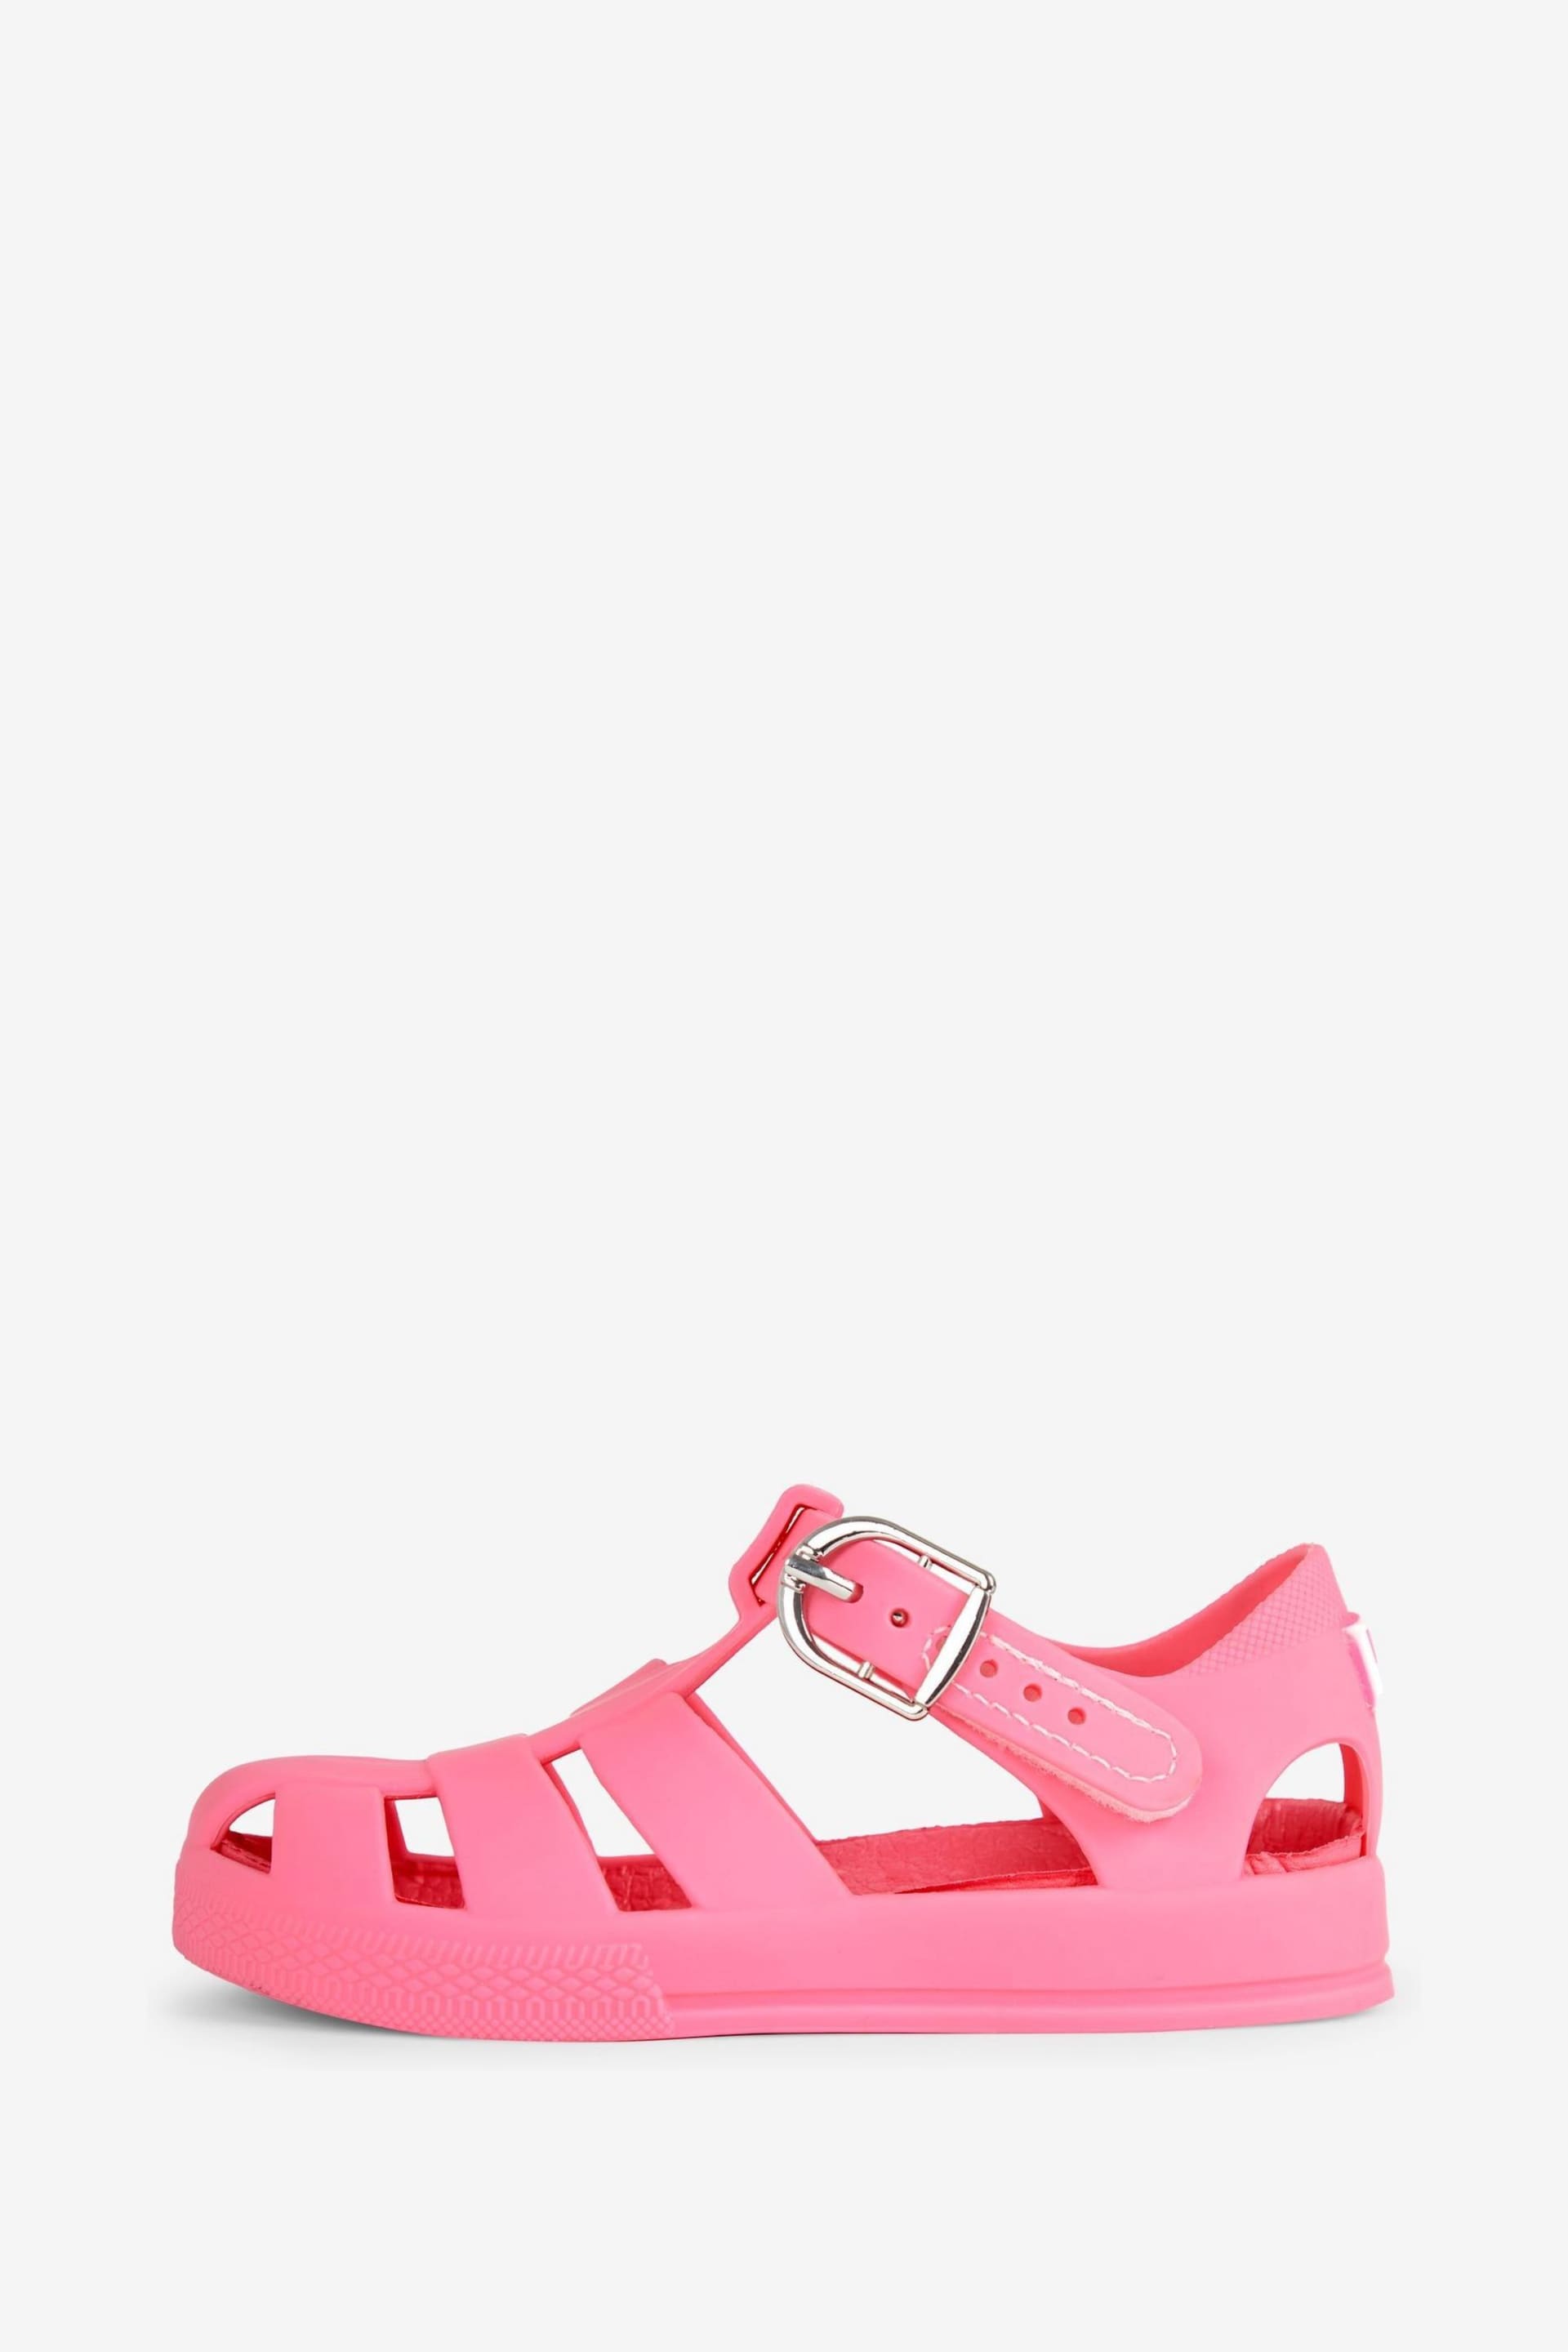 JoJo Maman Bébé Pink Jelly Sandals - Image 2 of 4